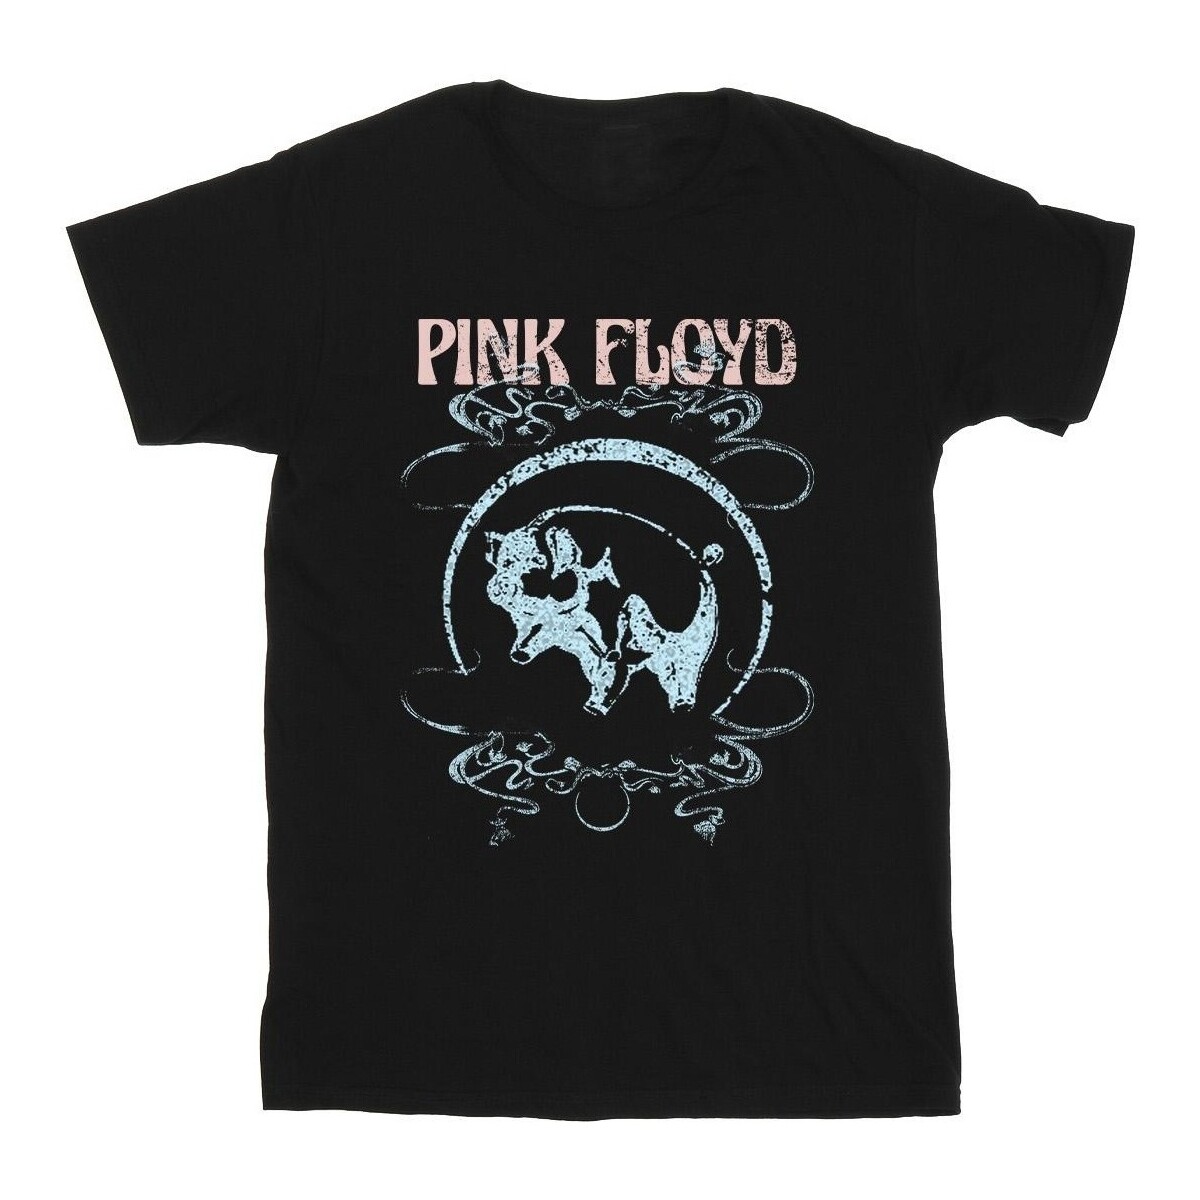 Vêtements Fille T-shirts manches longues Pink Floyd Pig Swirls Noir